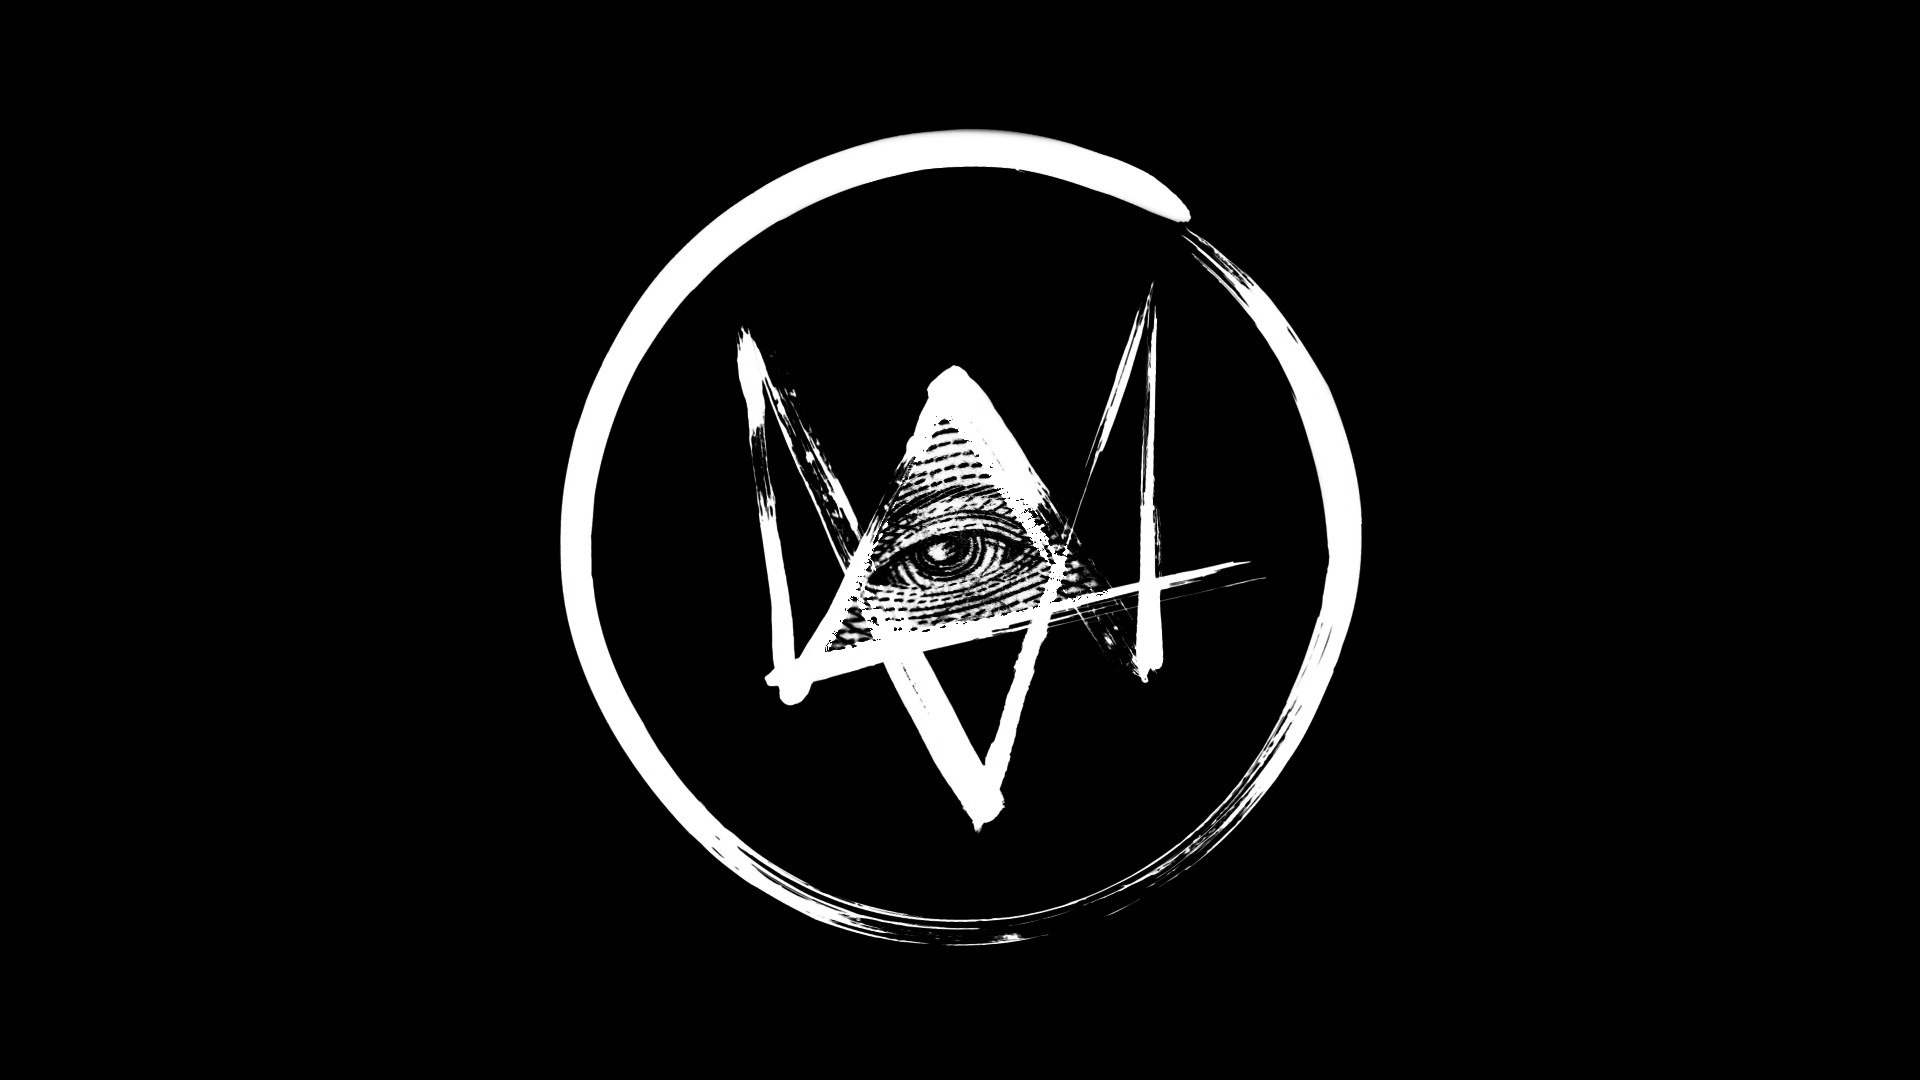 Illuminati logo wallpaper iphone 102285